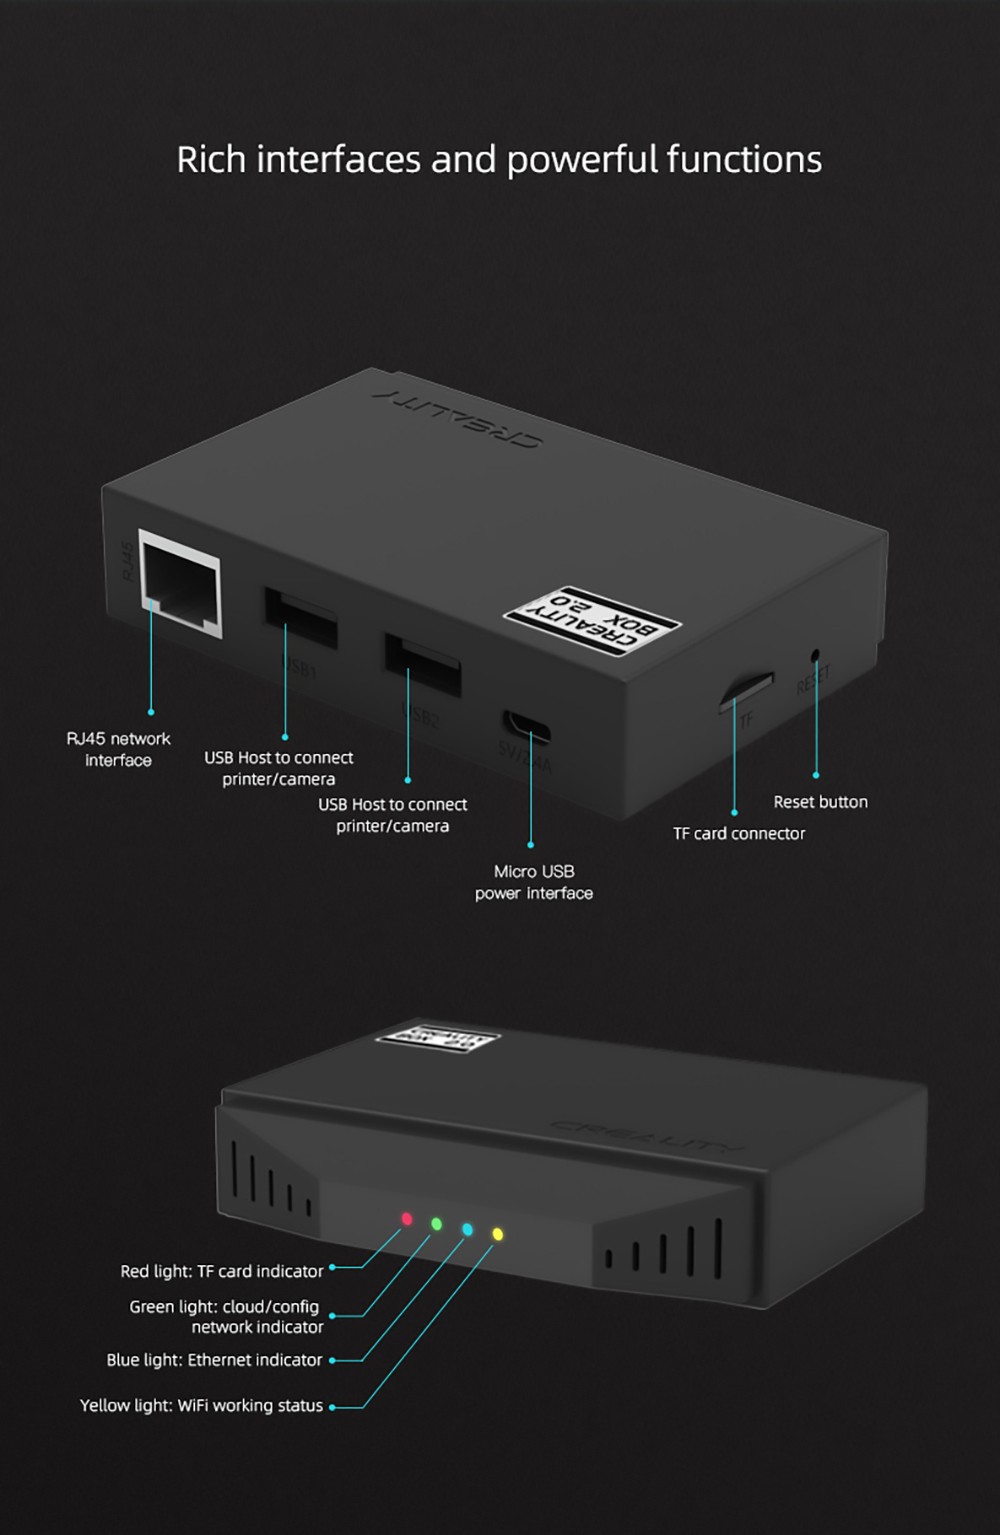 Creality Smart Kit 2.0 with 8G TF Card, Creality WiFi Box 2.0, 1080P Web Camera for Ender-3, Ender-3 Pro, Ender-3 V2